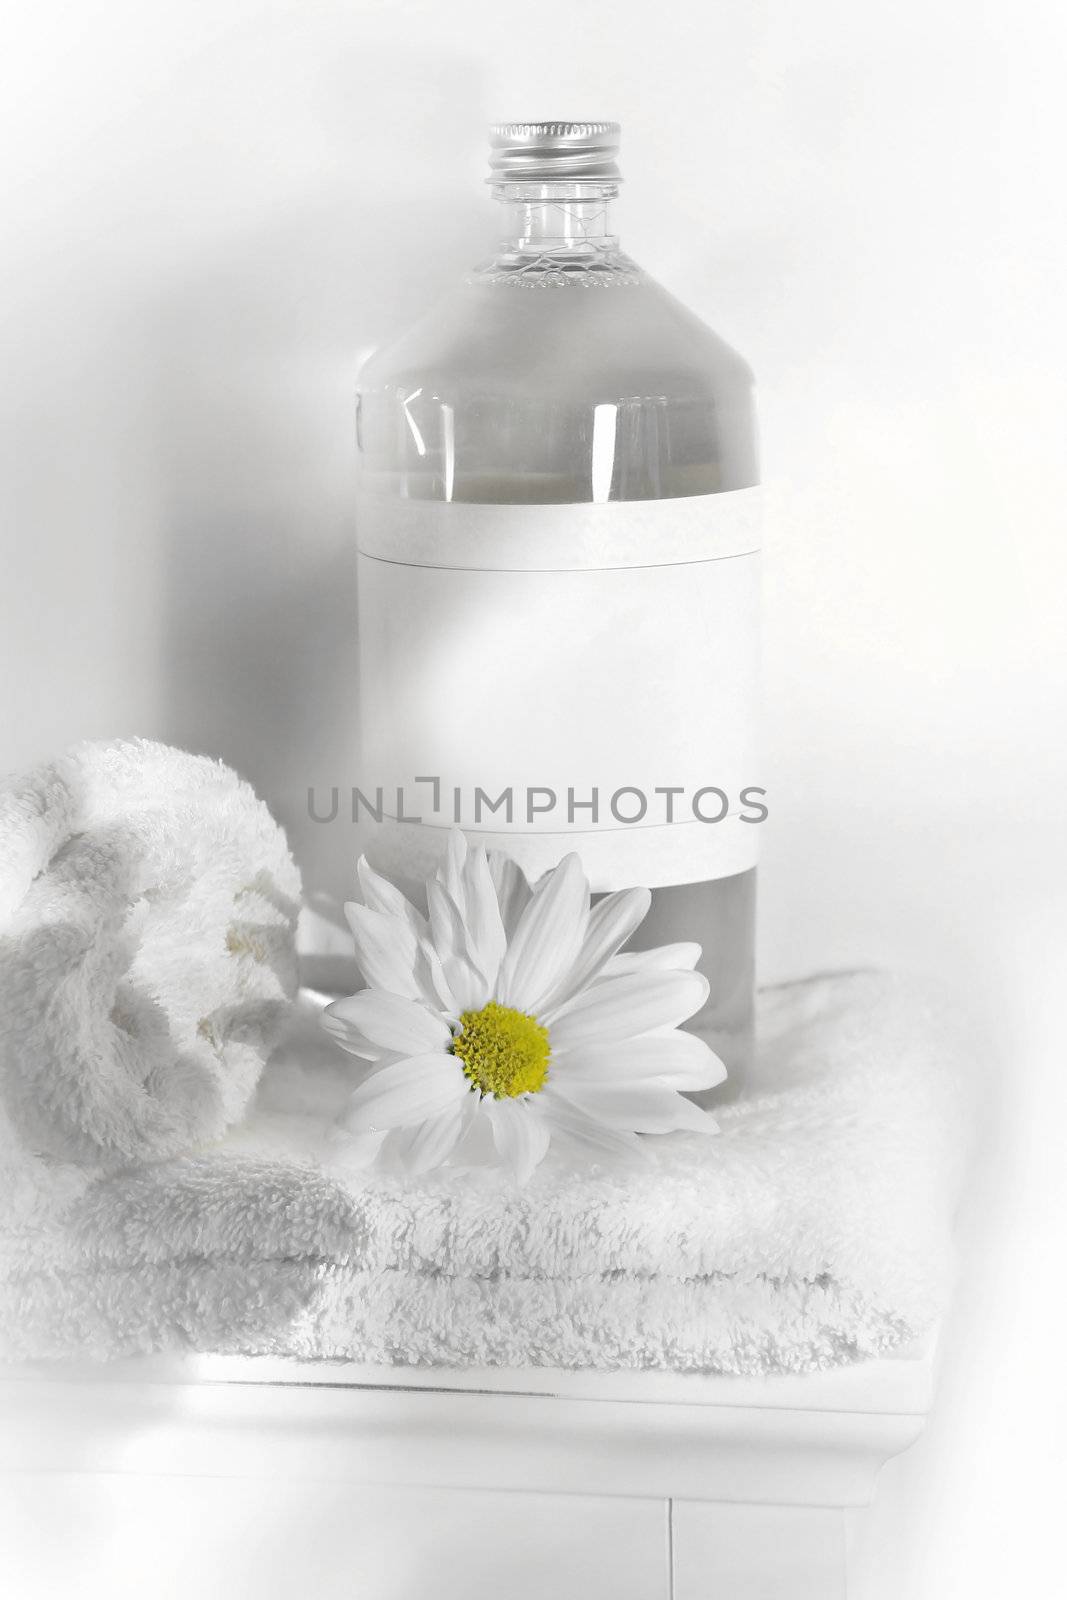 Linen water on towel by Sandralise